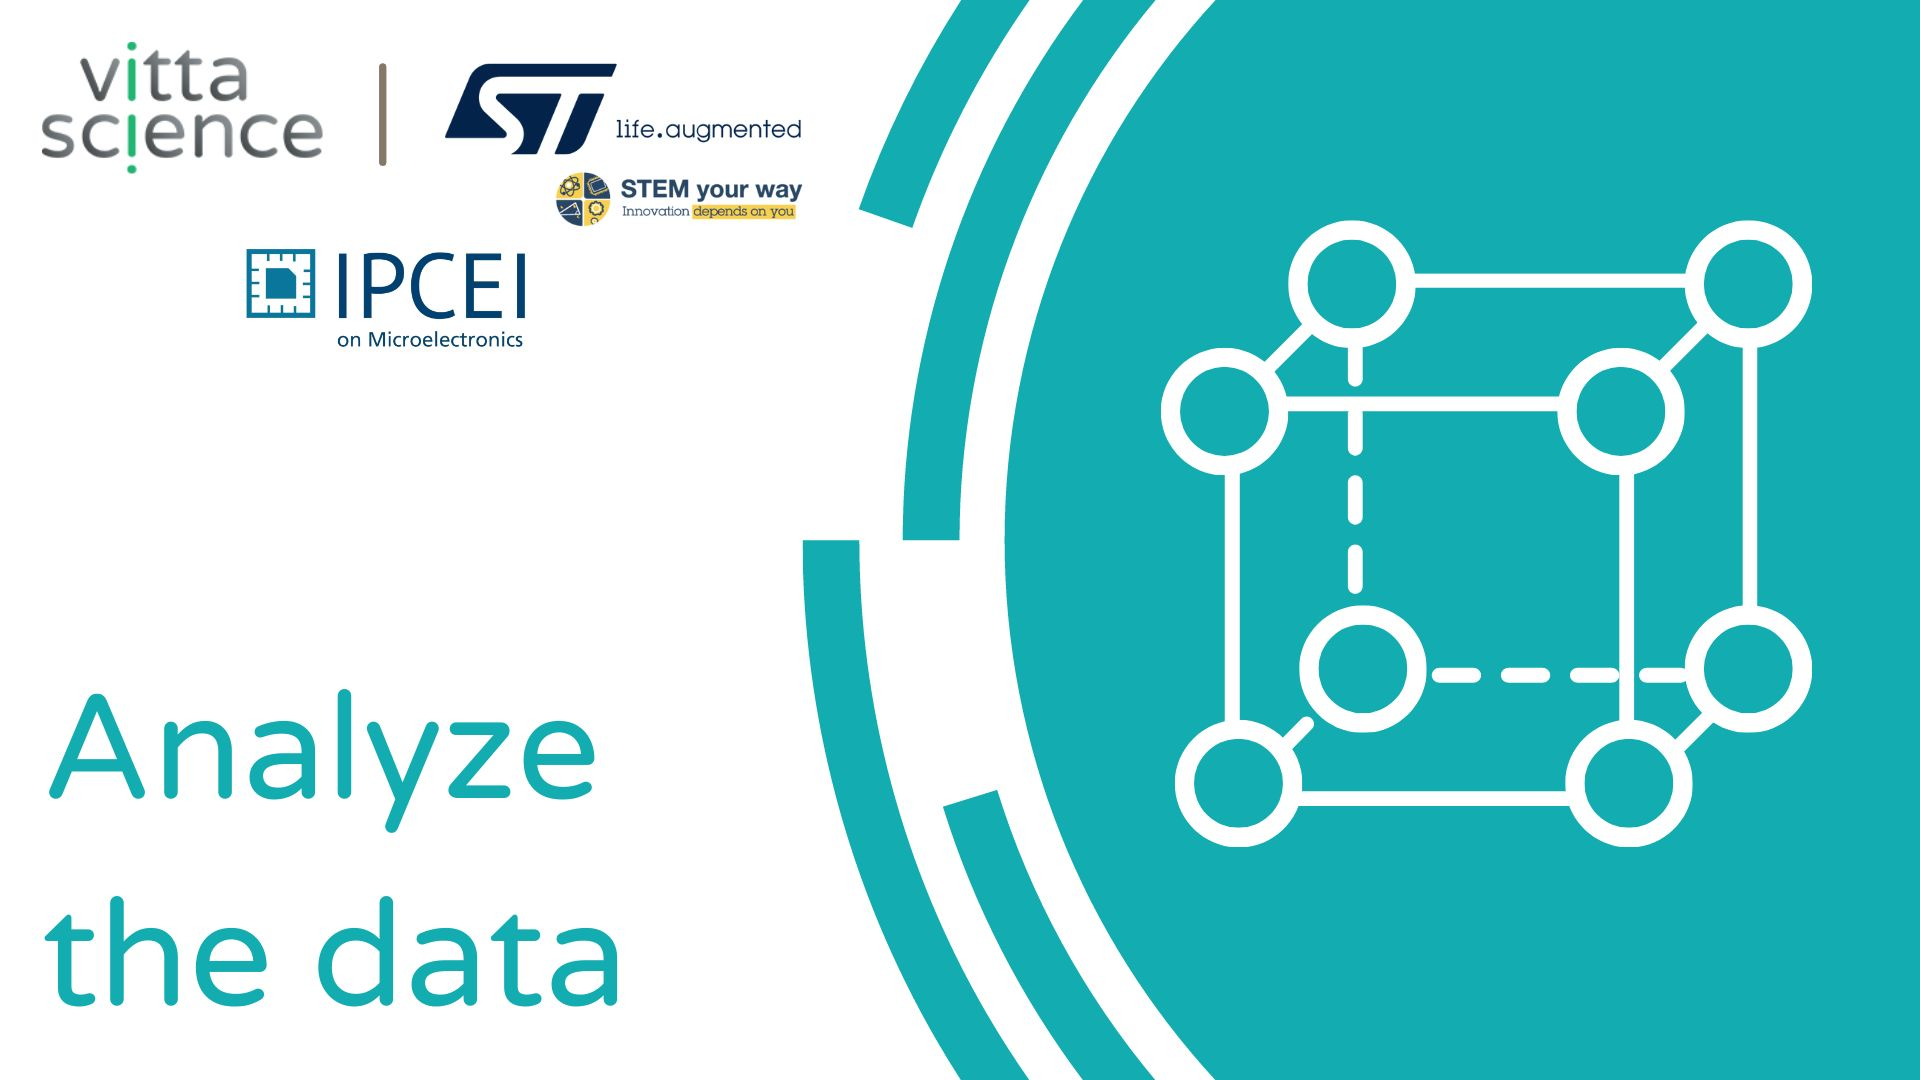 Activity No. 12: Analyze the data available on the Vittamap (IoT sensors kit)